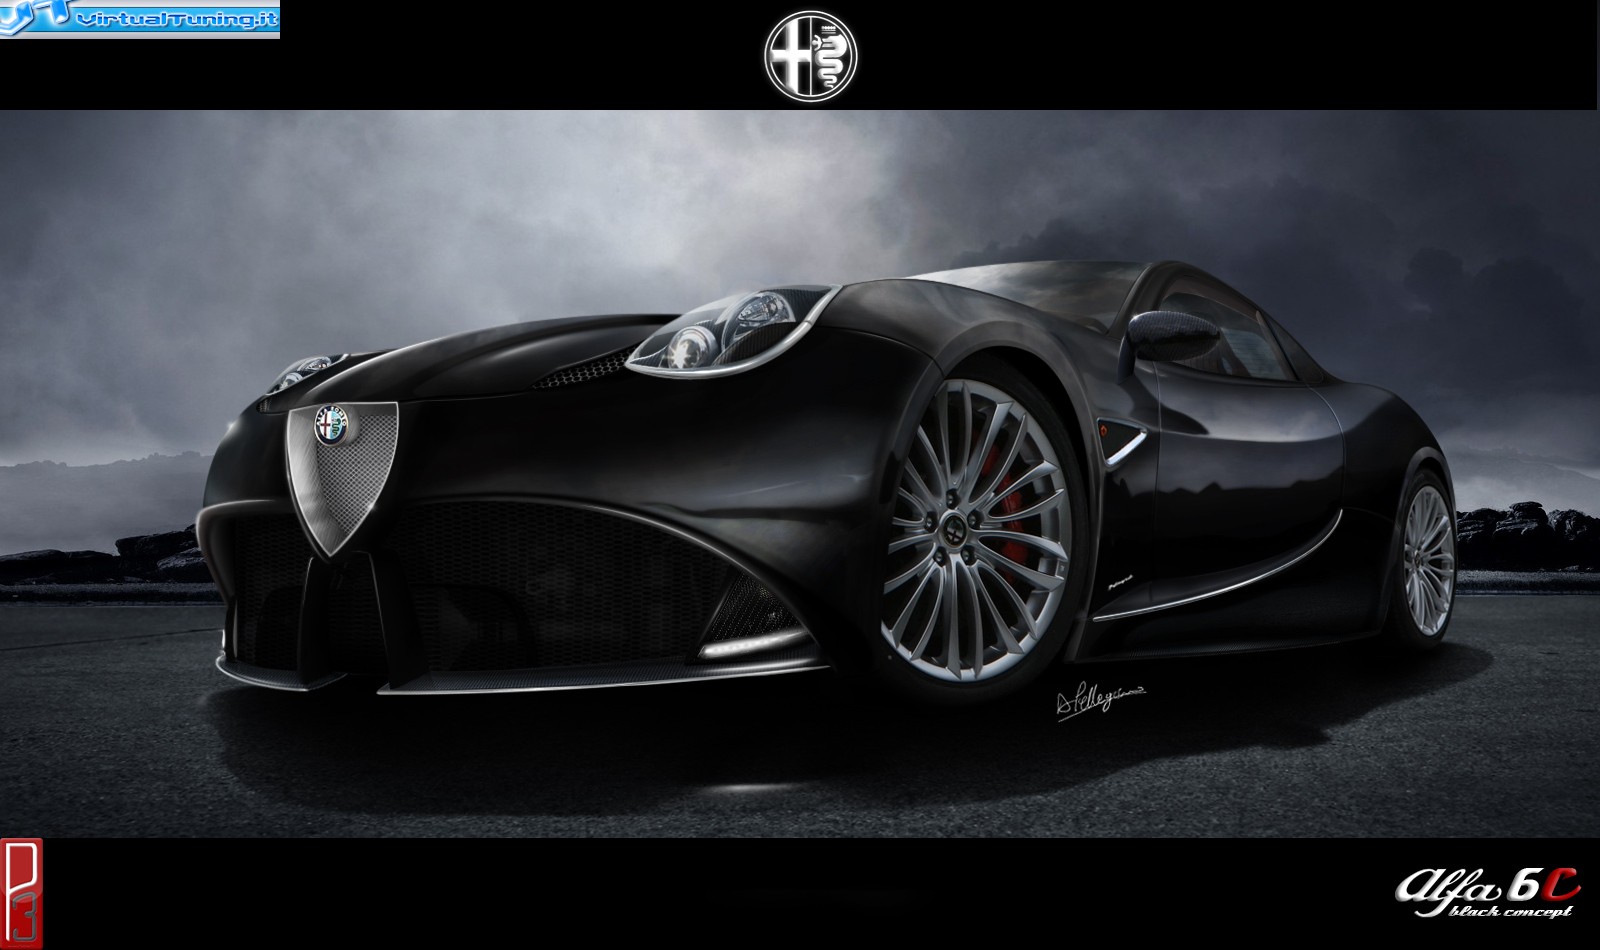 VirtualTuning ALFA ROMEO 6C Black Concept by 